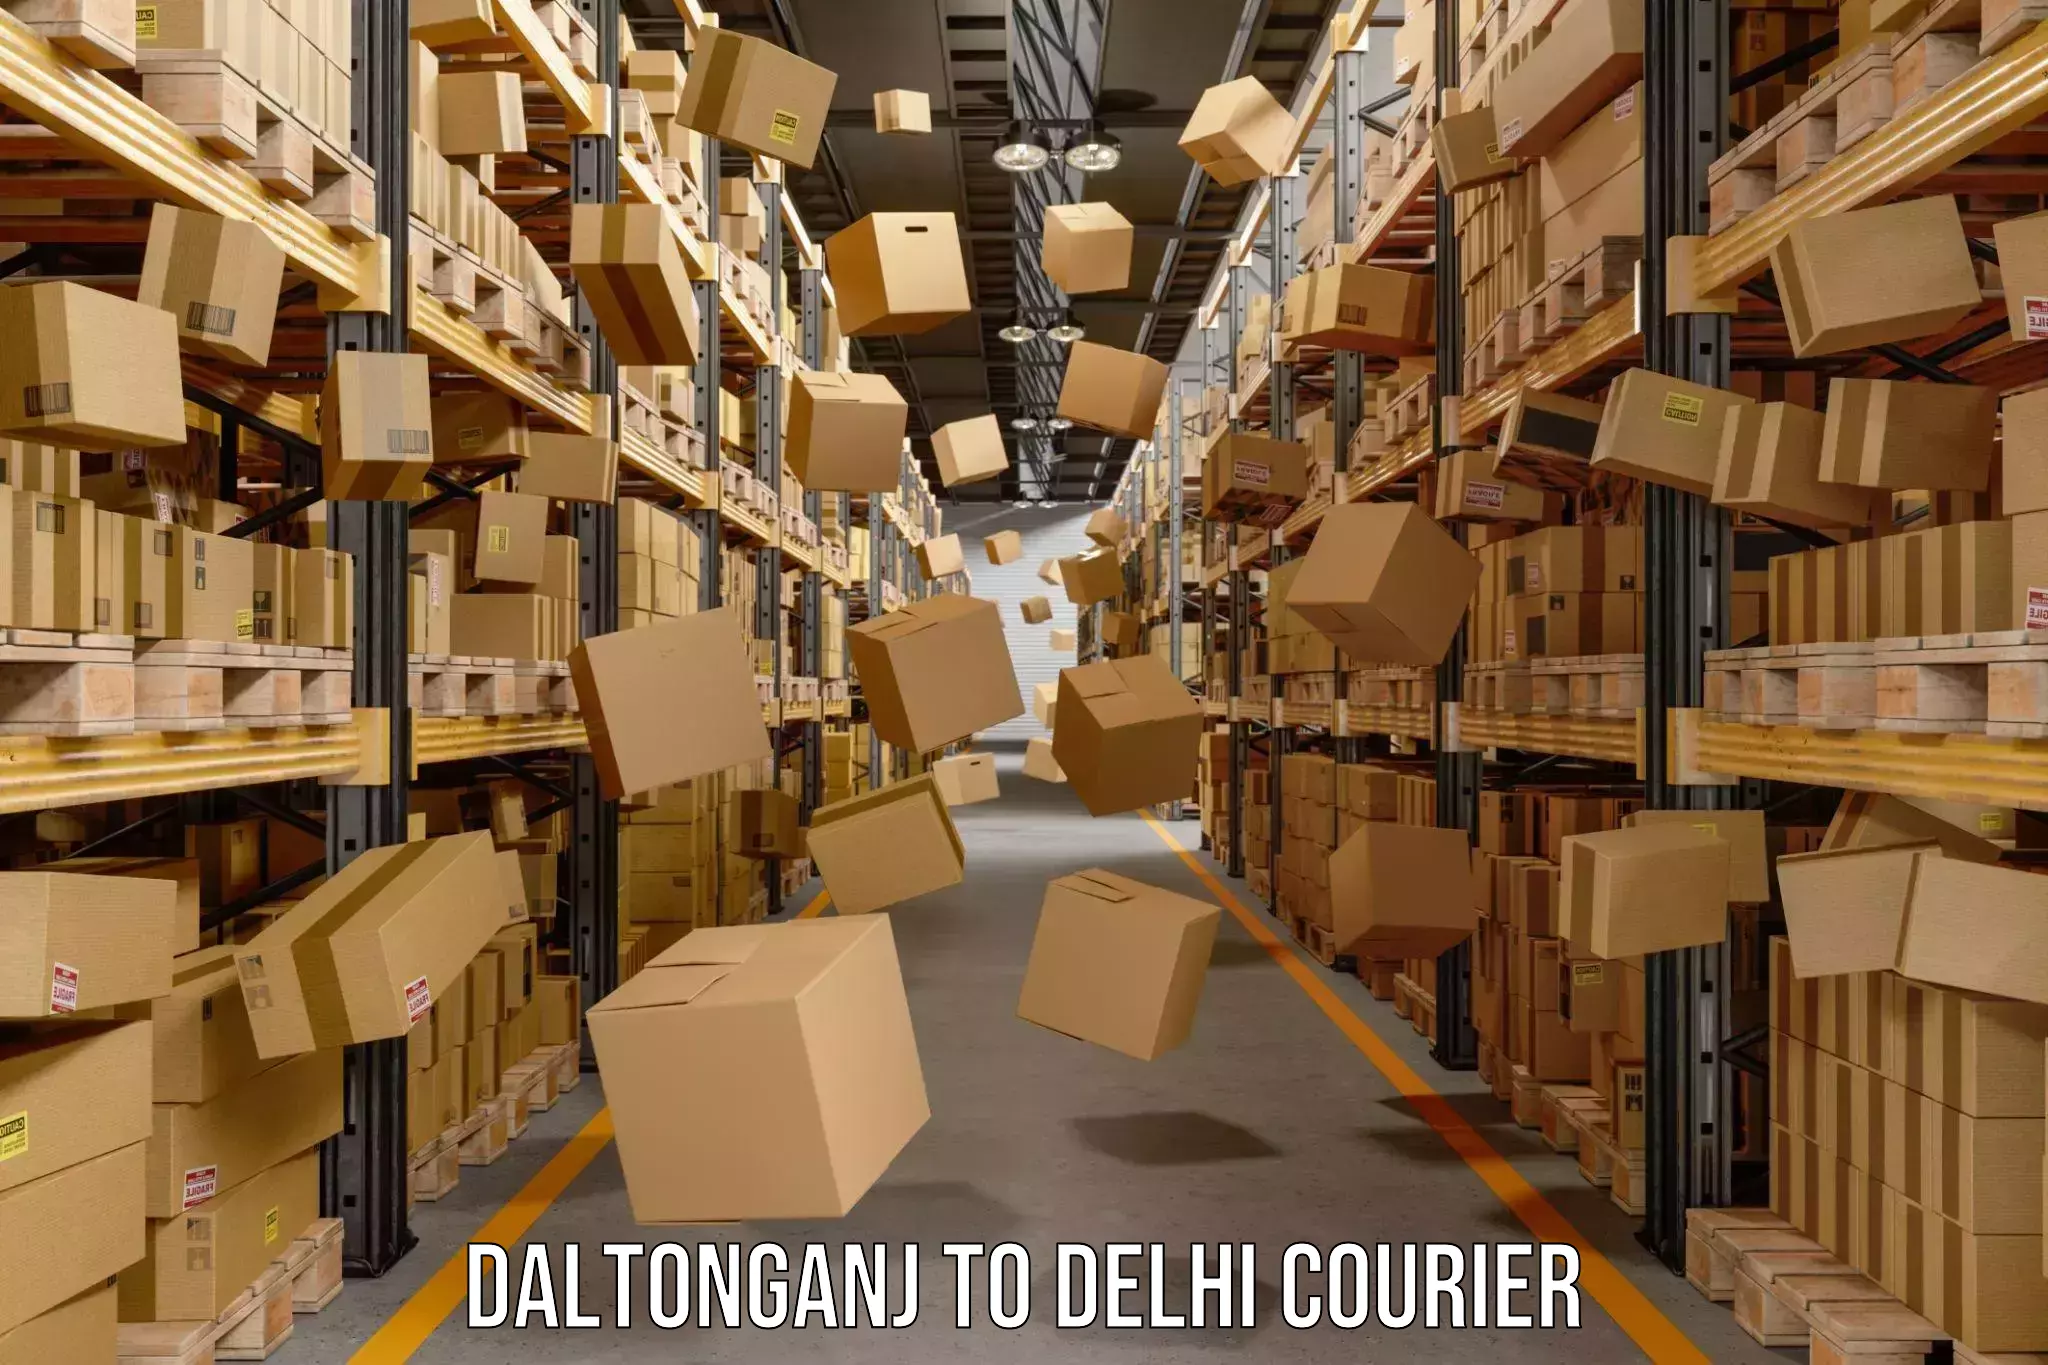 Express delivery network Daltonganj to Delhi